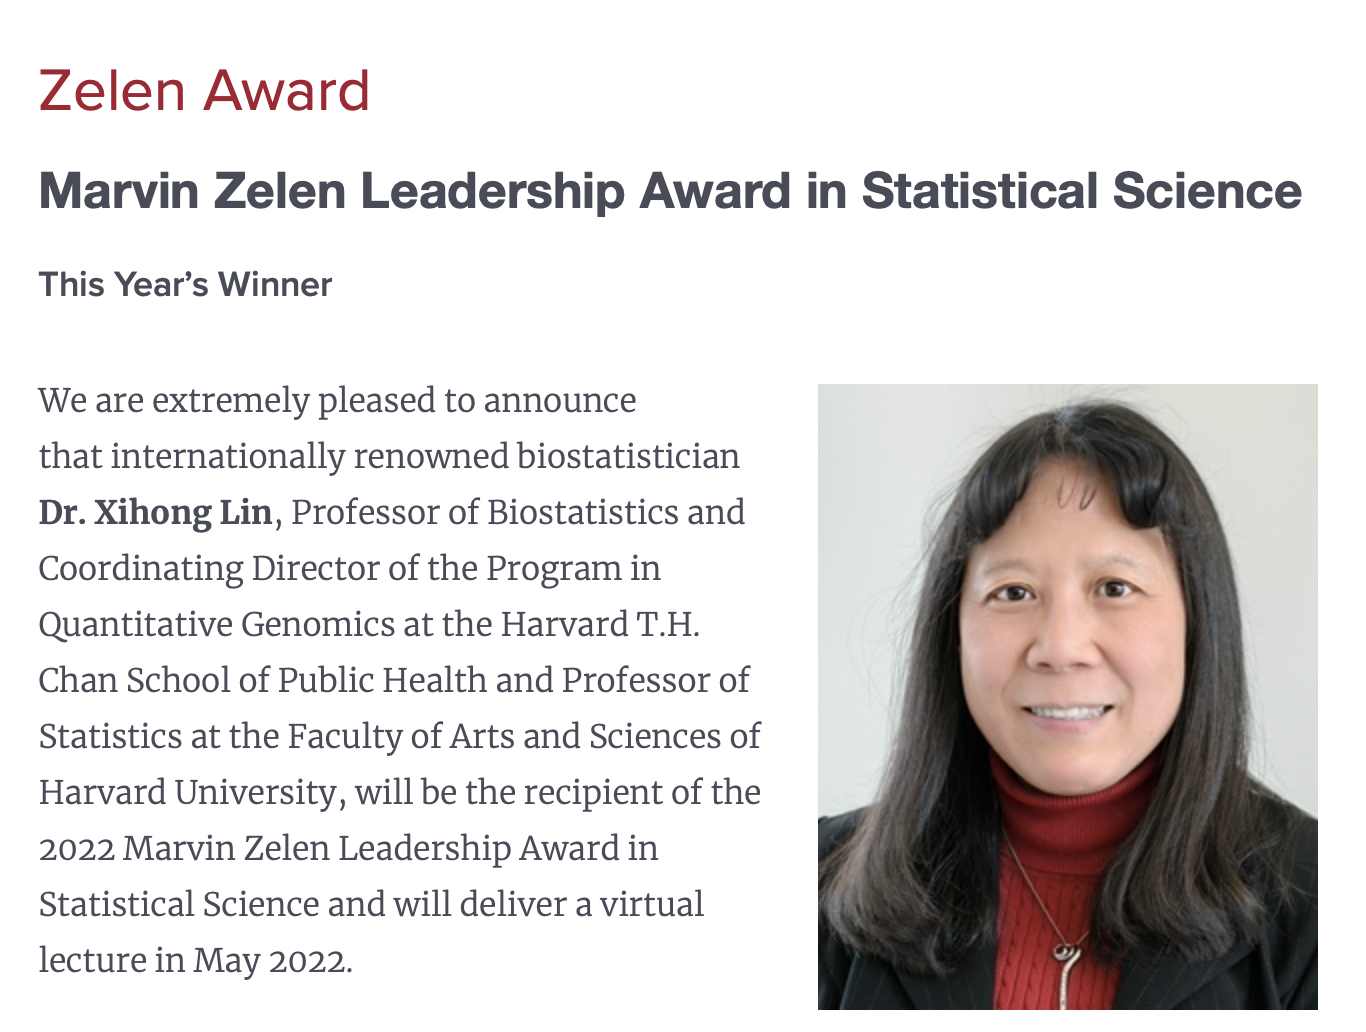 Prof. Xihong Lin Won the Marvin Zelen Leadership Award in Statistical Science